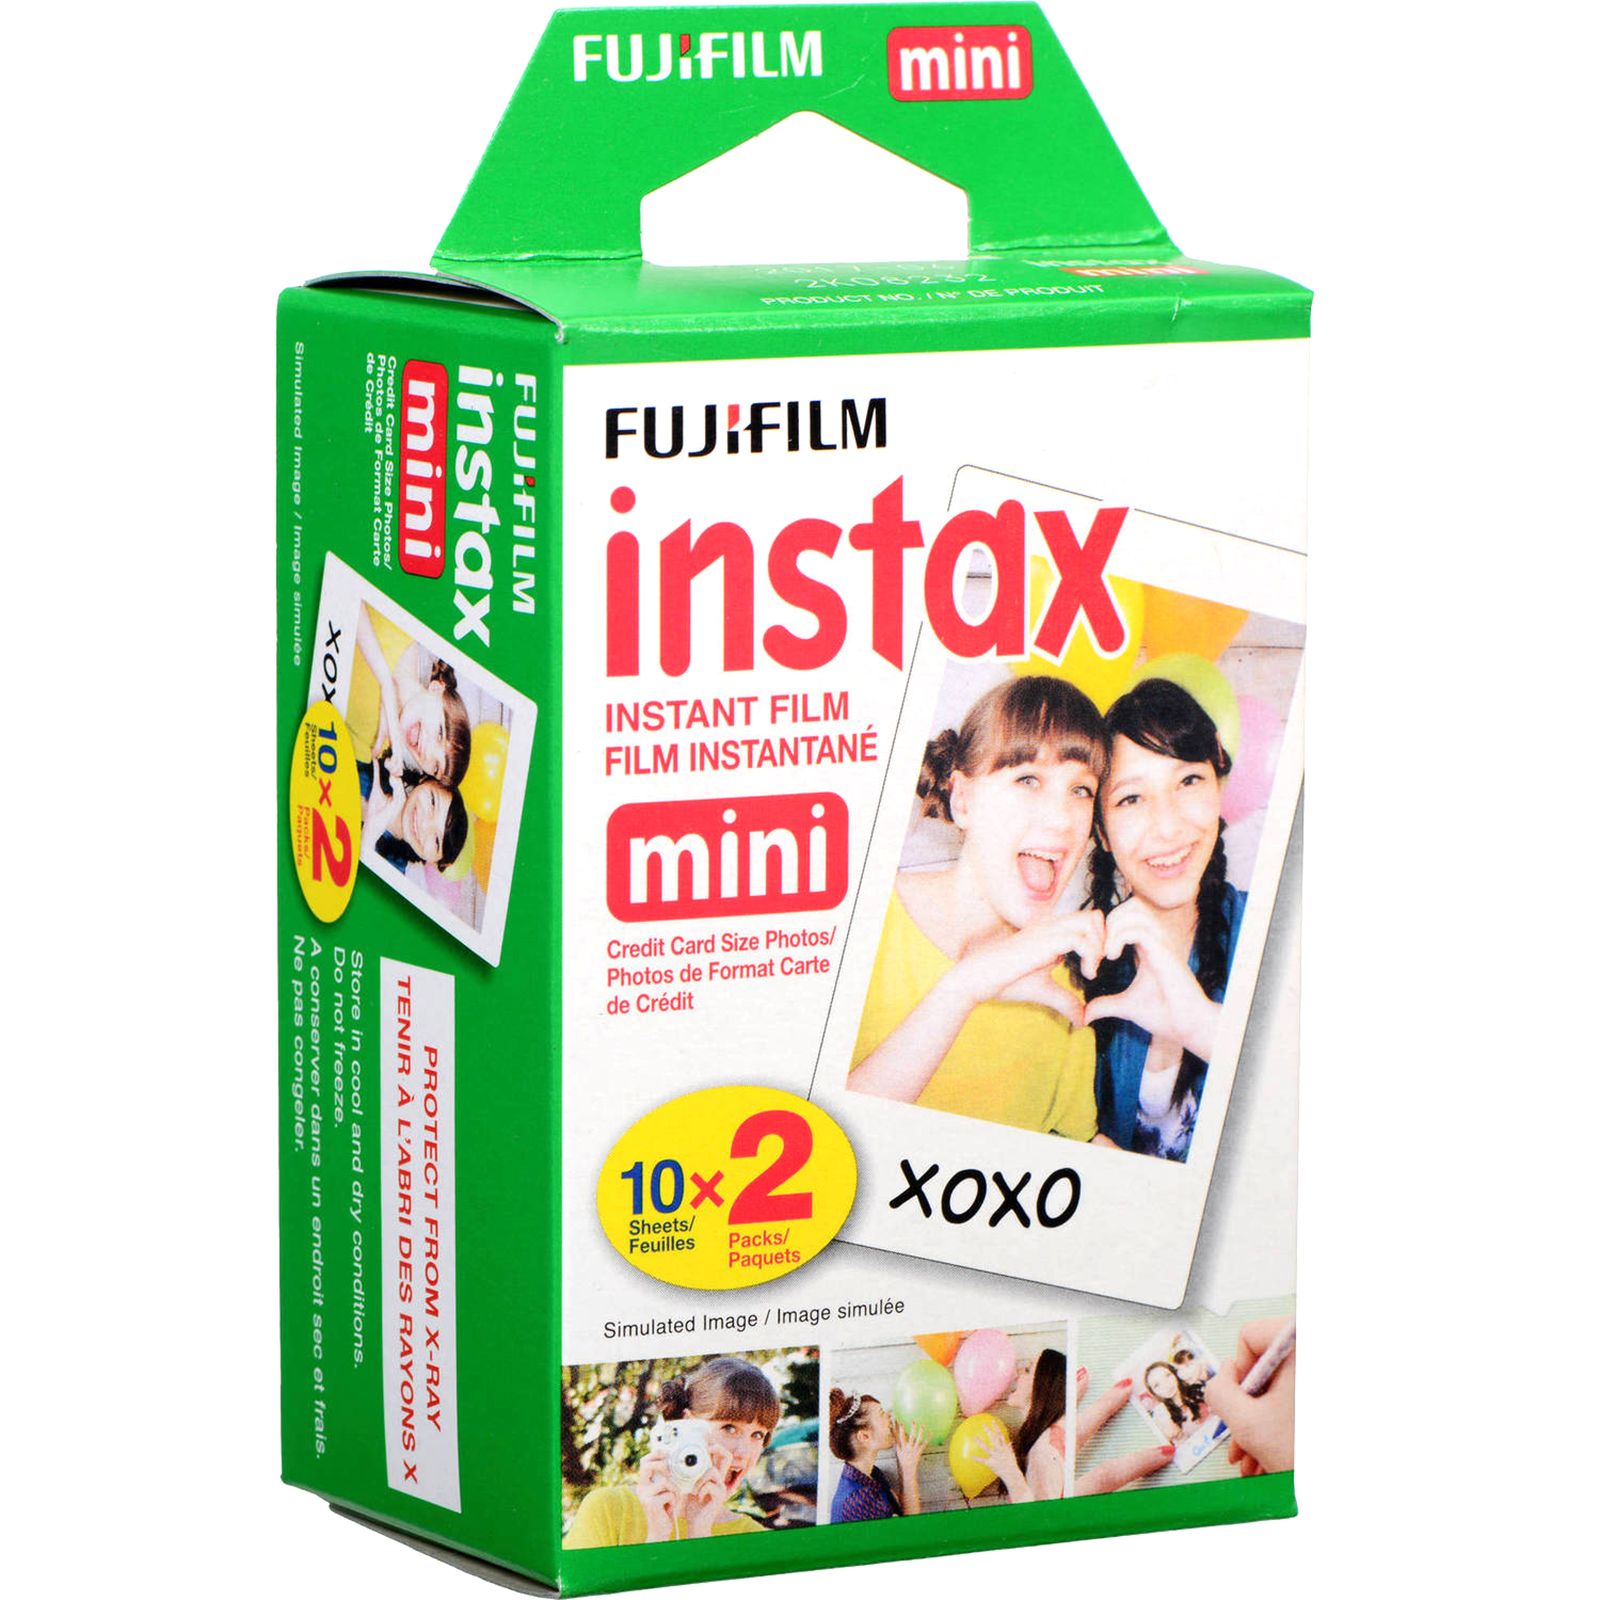 wholesale fujifilm instax film, wholesale fujifilm instax film